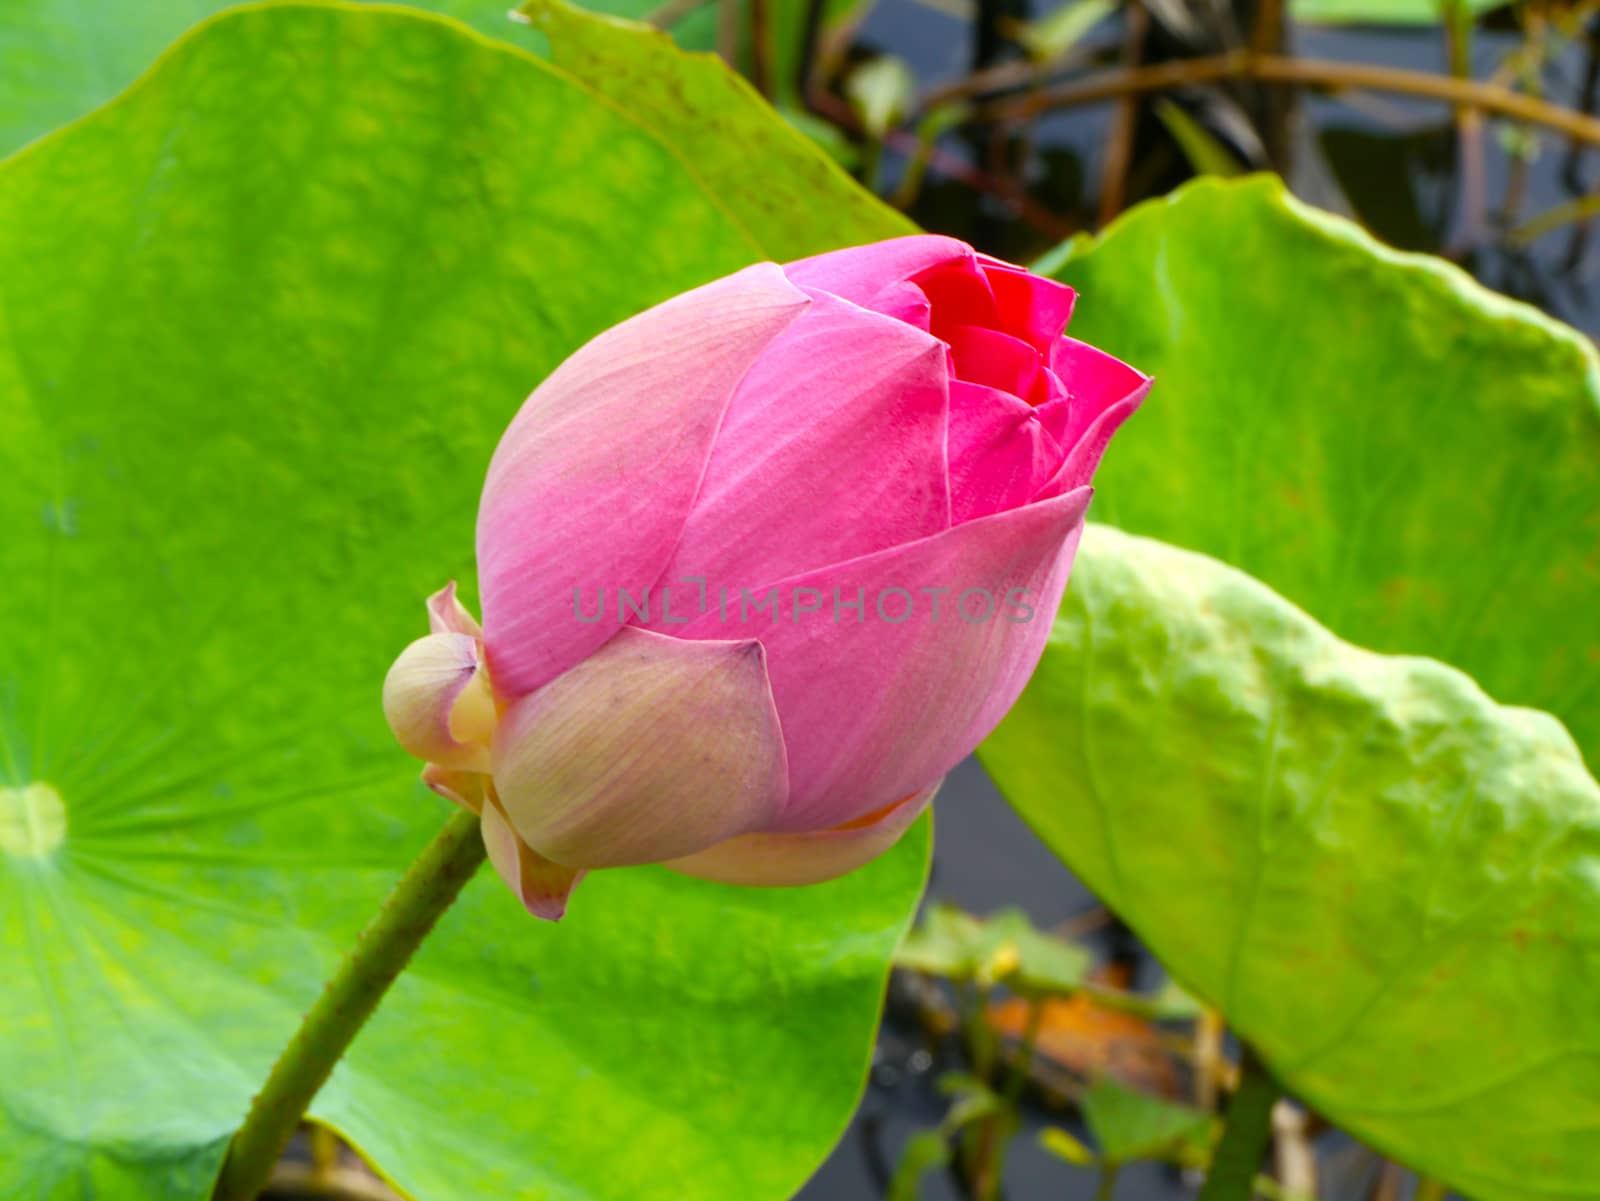 Blooming lotus flower by Noppharat_th